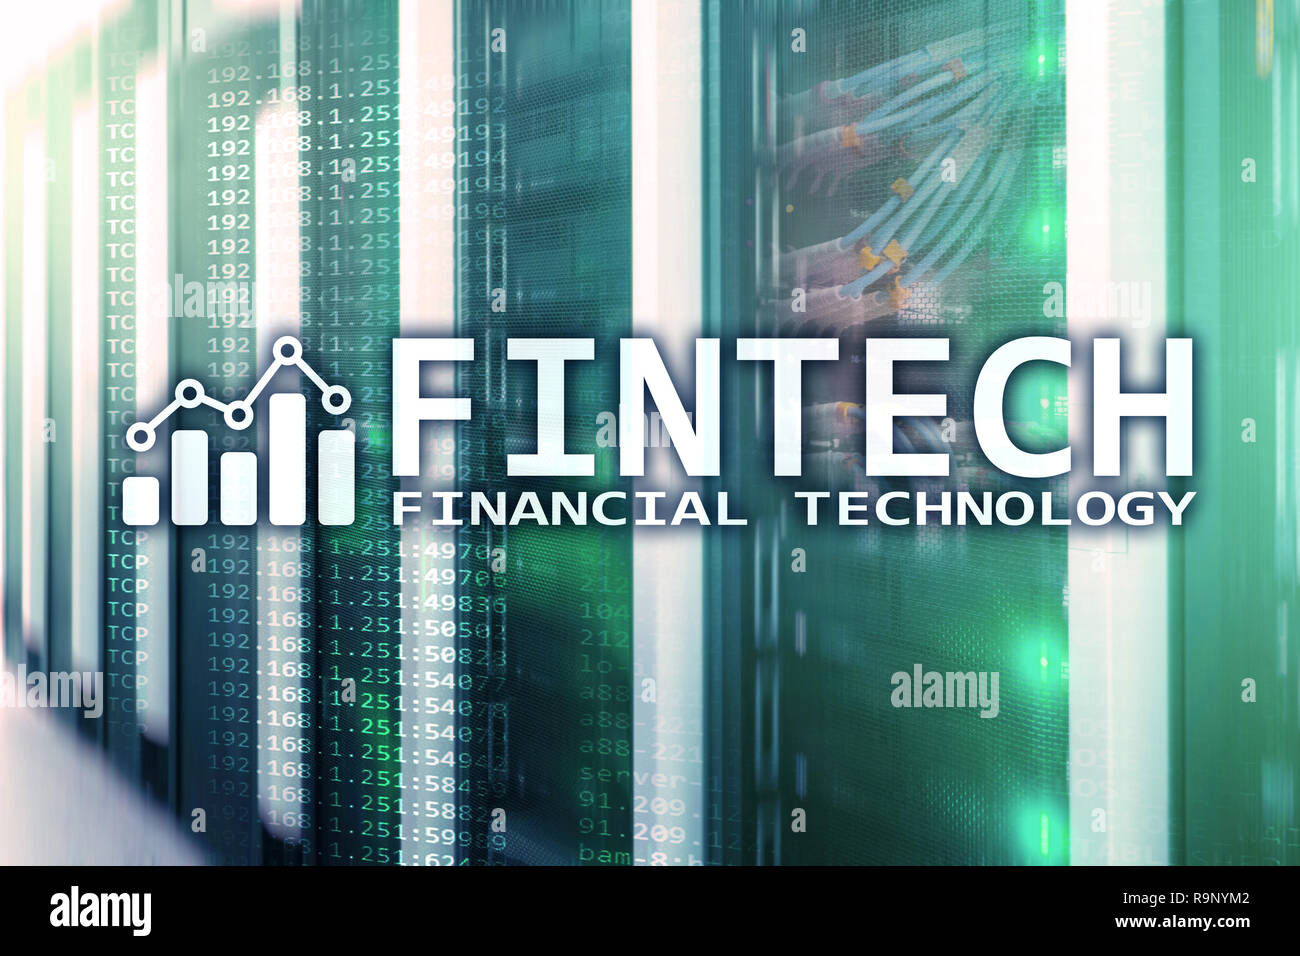 Fintech - Financial technology. Business solution and software development. Stock Photo